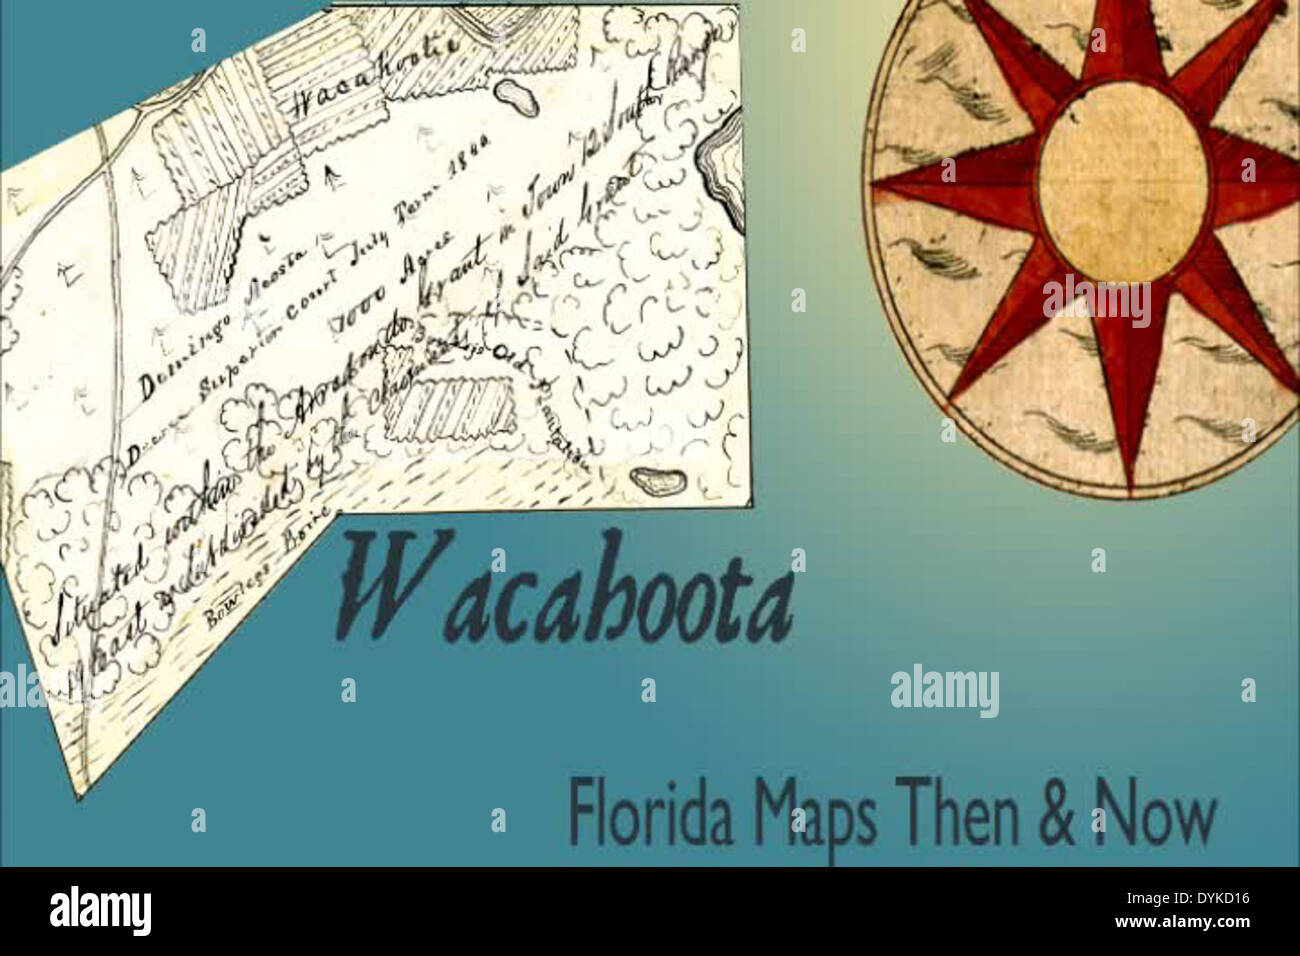 Florida Maps Then and Now: Wacahoota Stock Photo